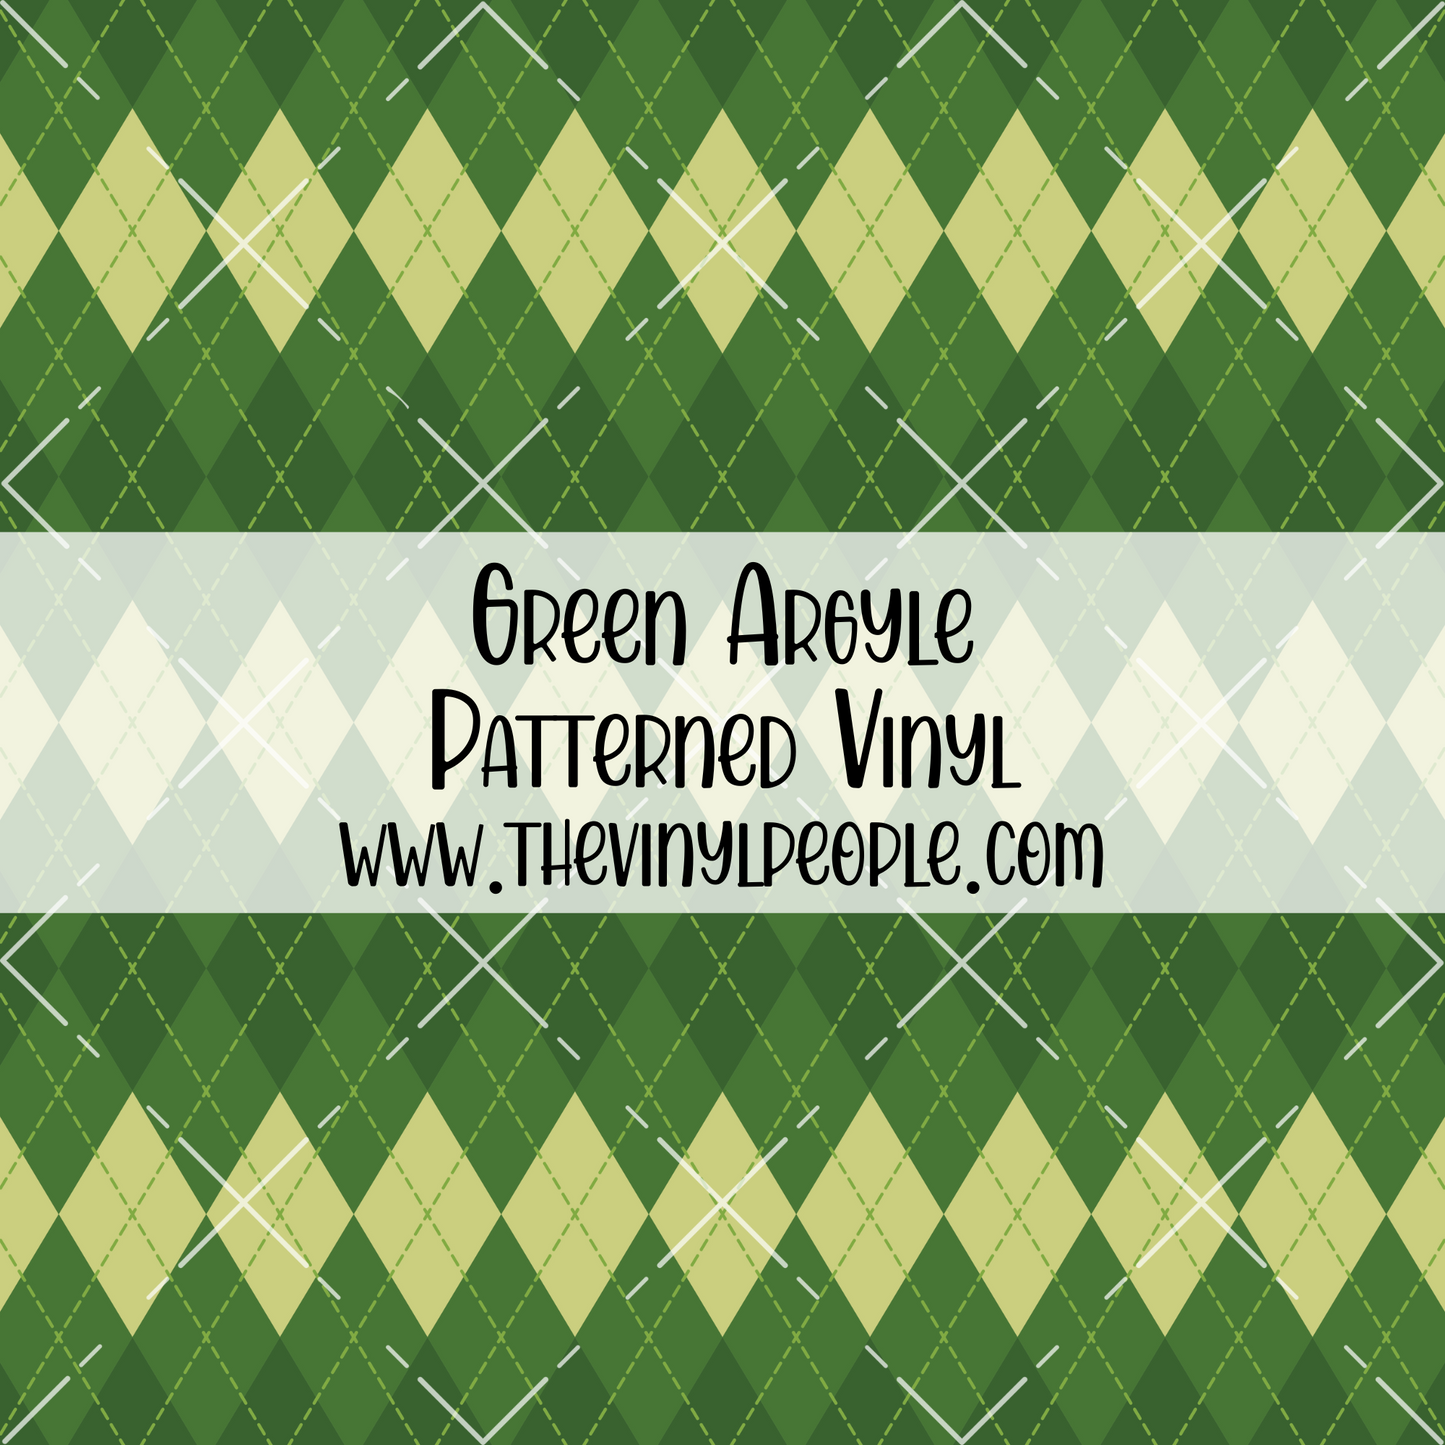 Green Argyle Patterned Vinyl